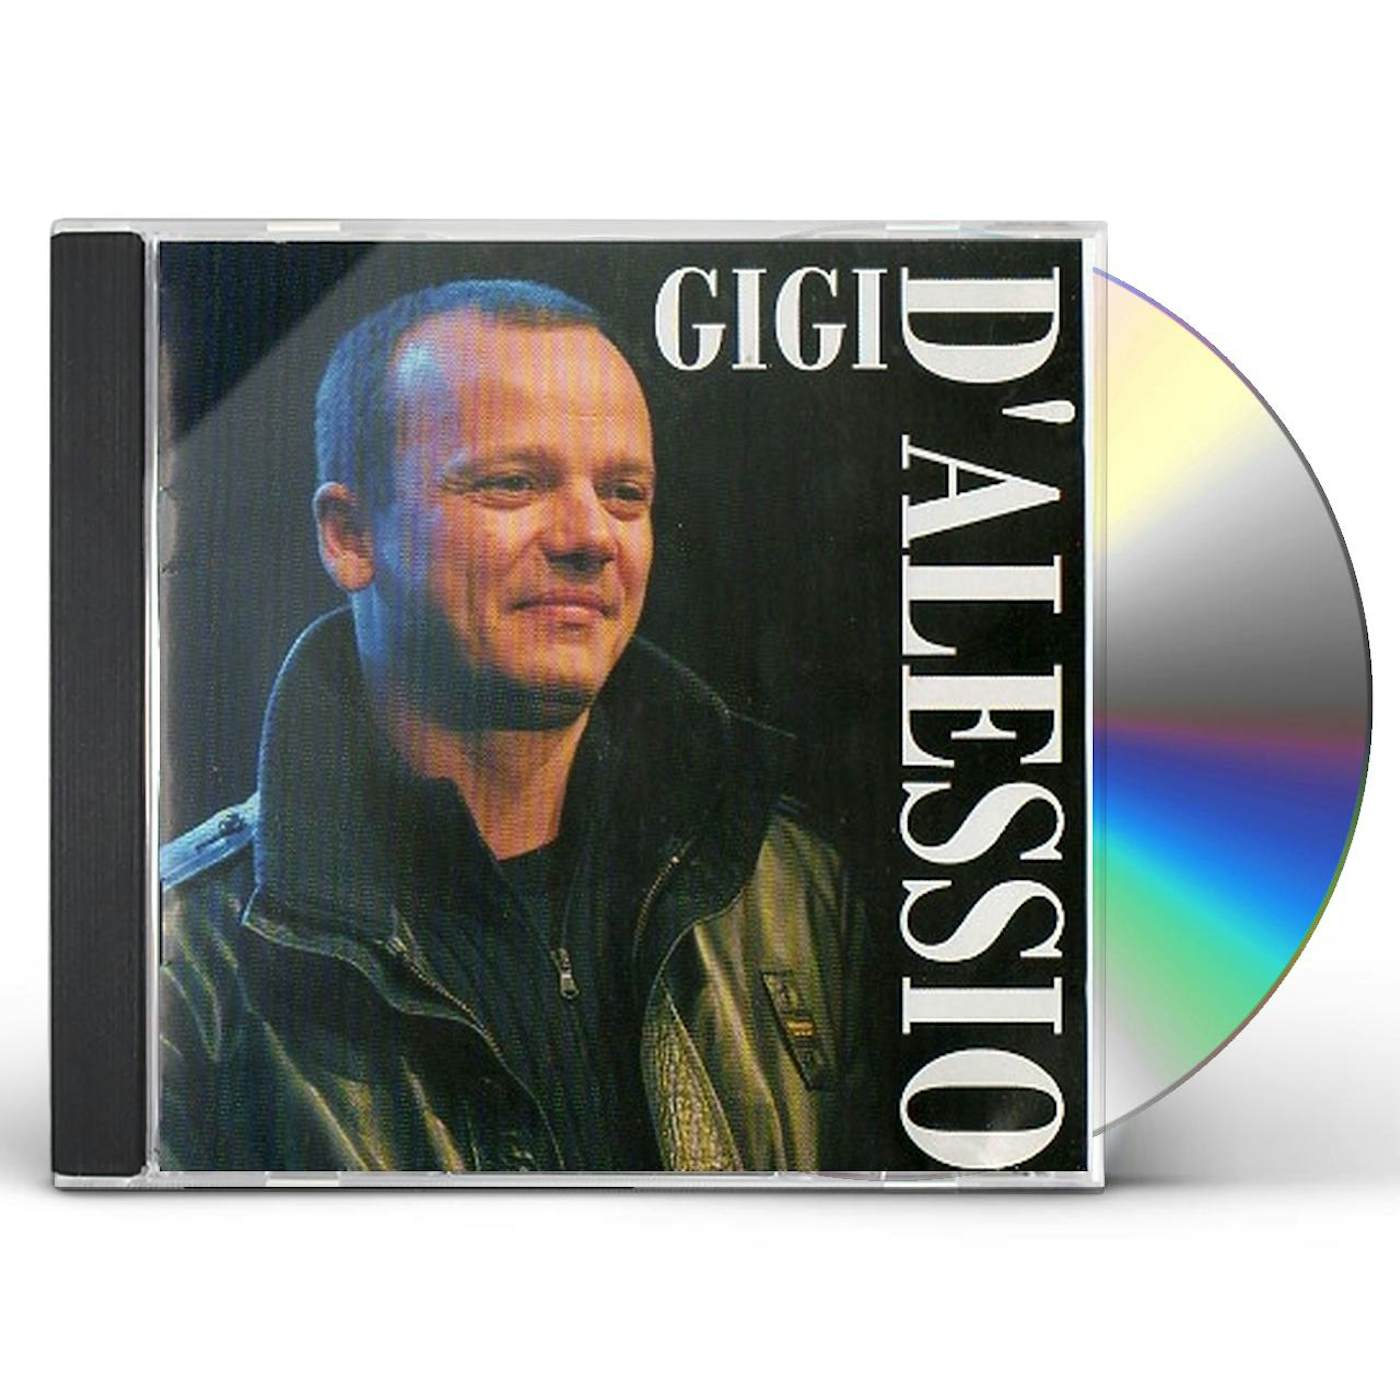 GIGI D'ALESSIO - MON AMOUR + Spanish version - PROMO CD with texts